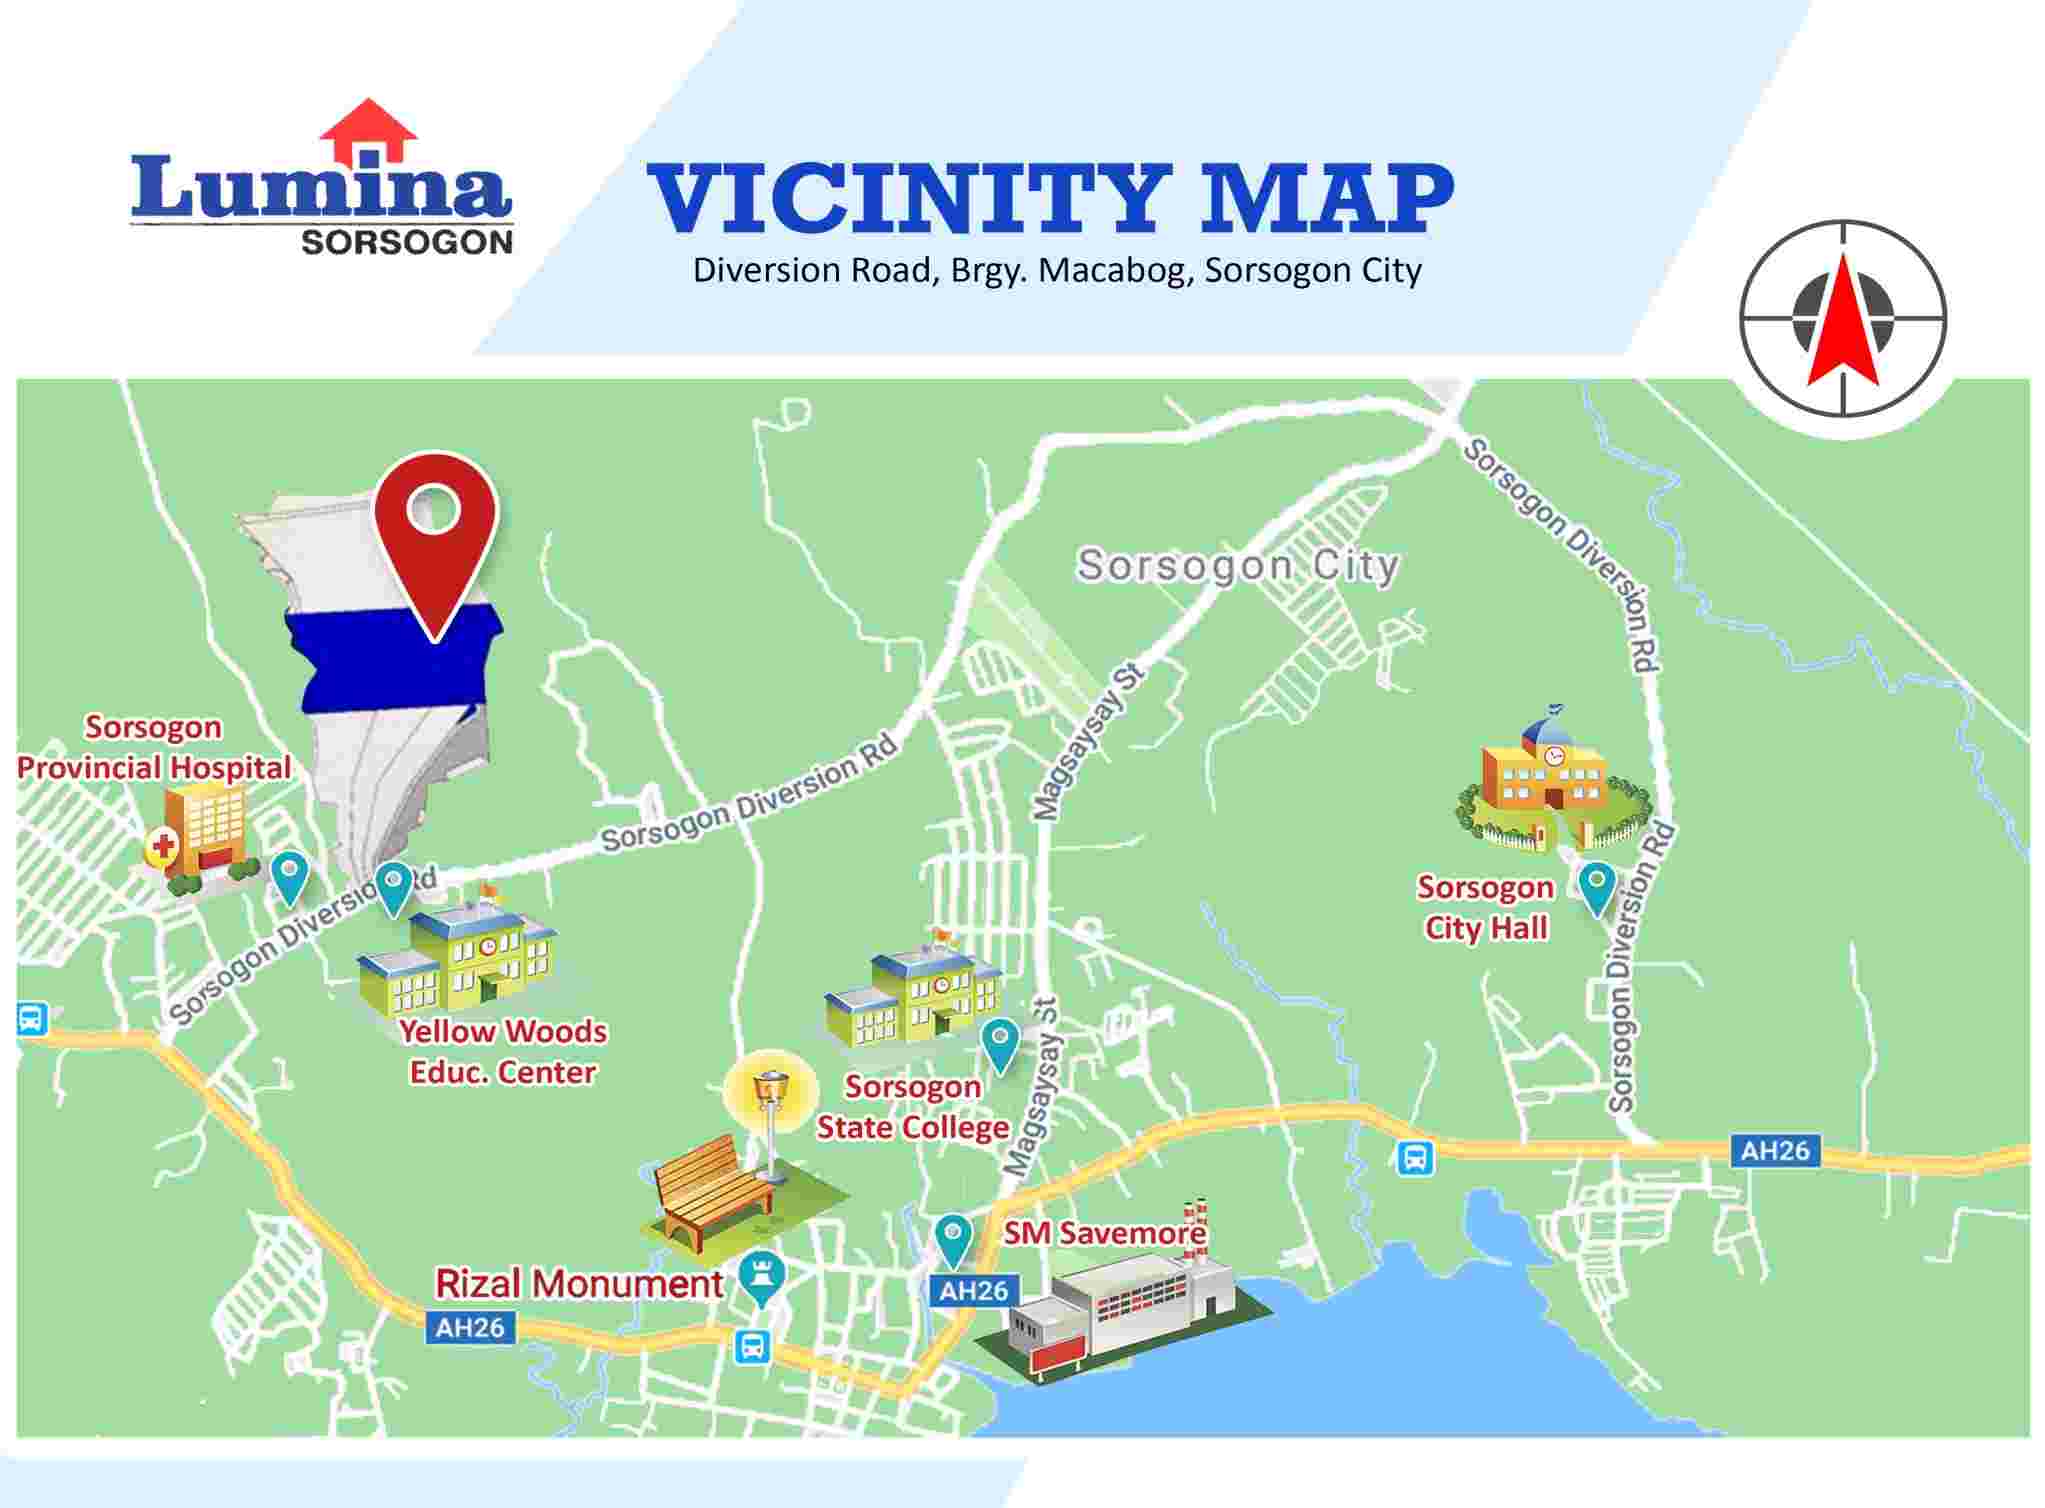 Vicinity-Map-sorsogon-1641958105.jpeg